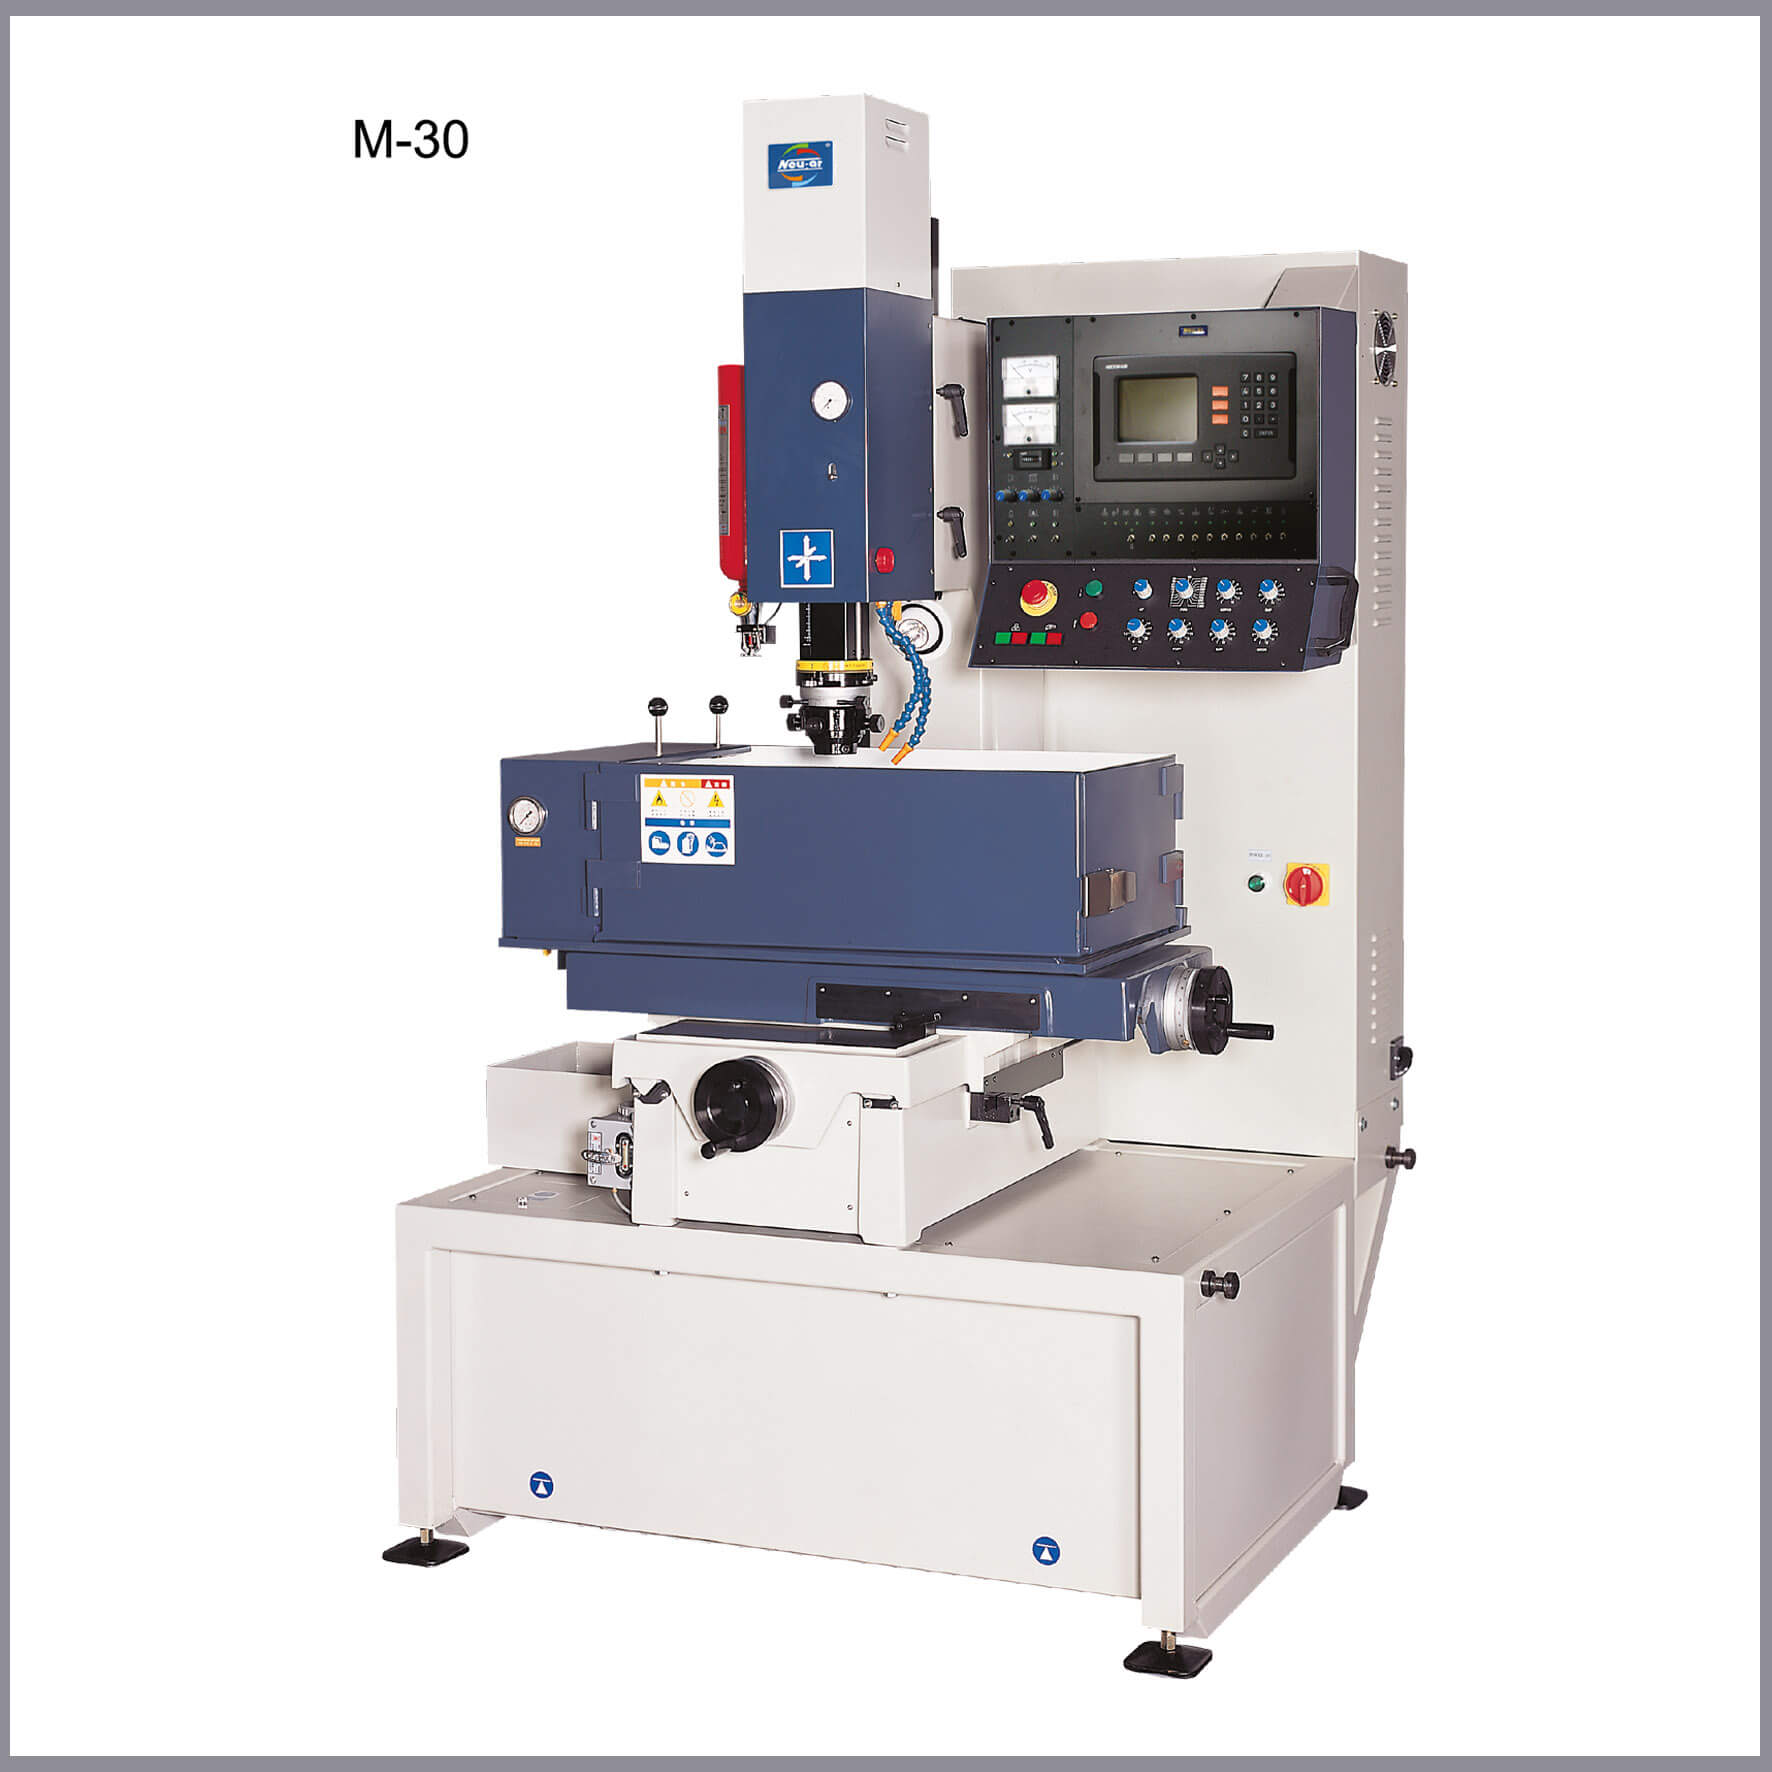 NEUAR CNC-M30 250 x 200 x 200 mm